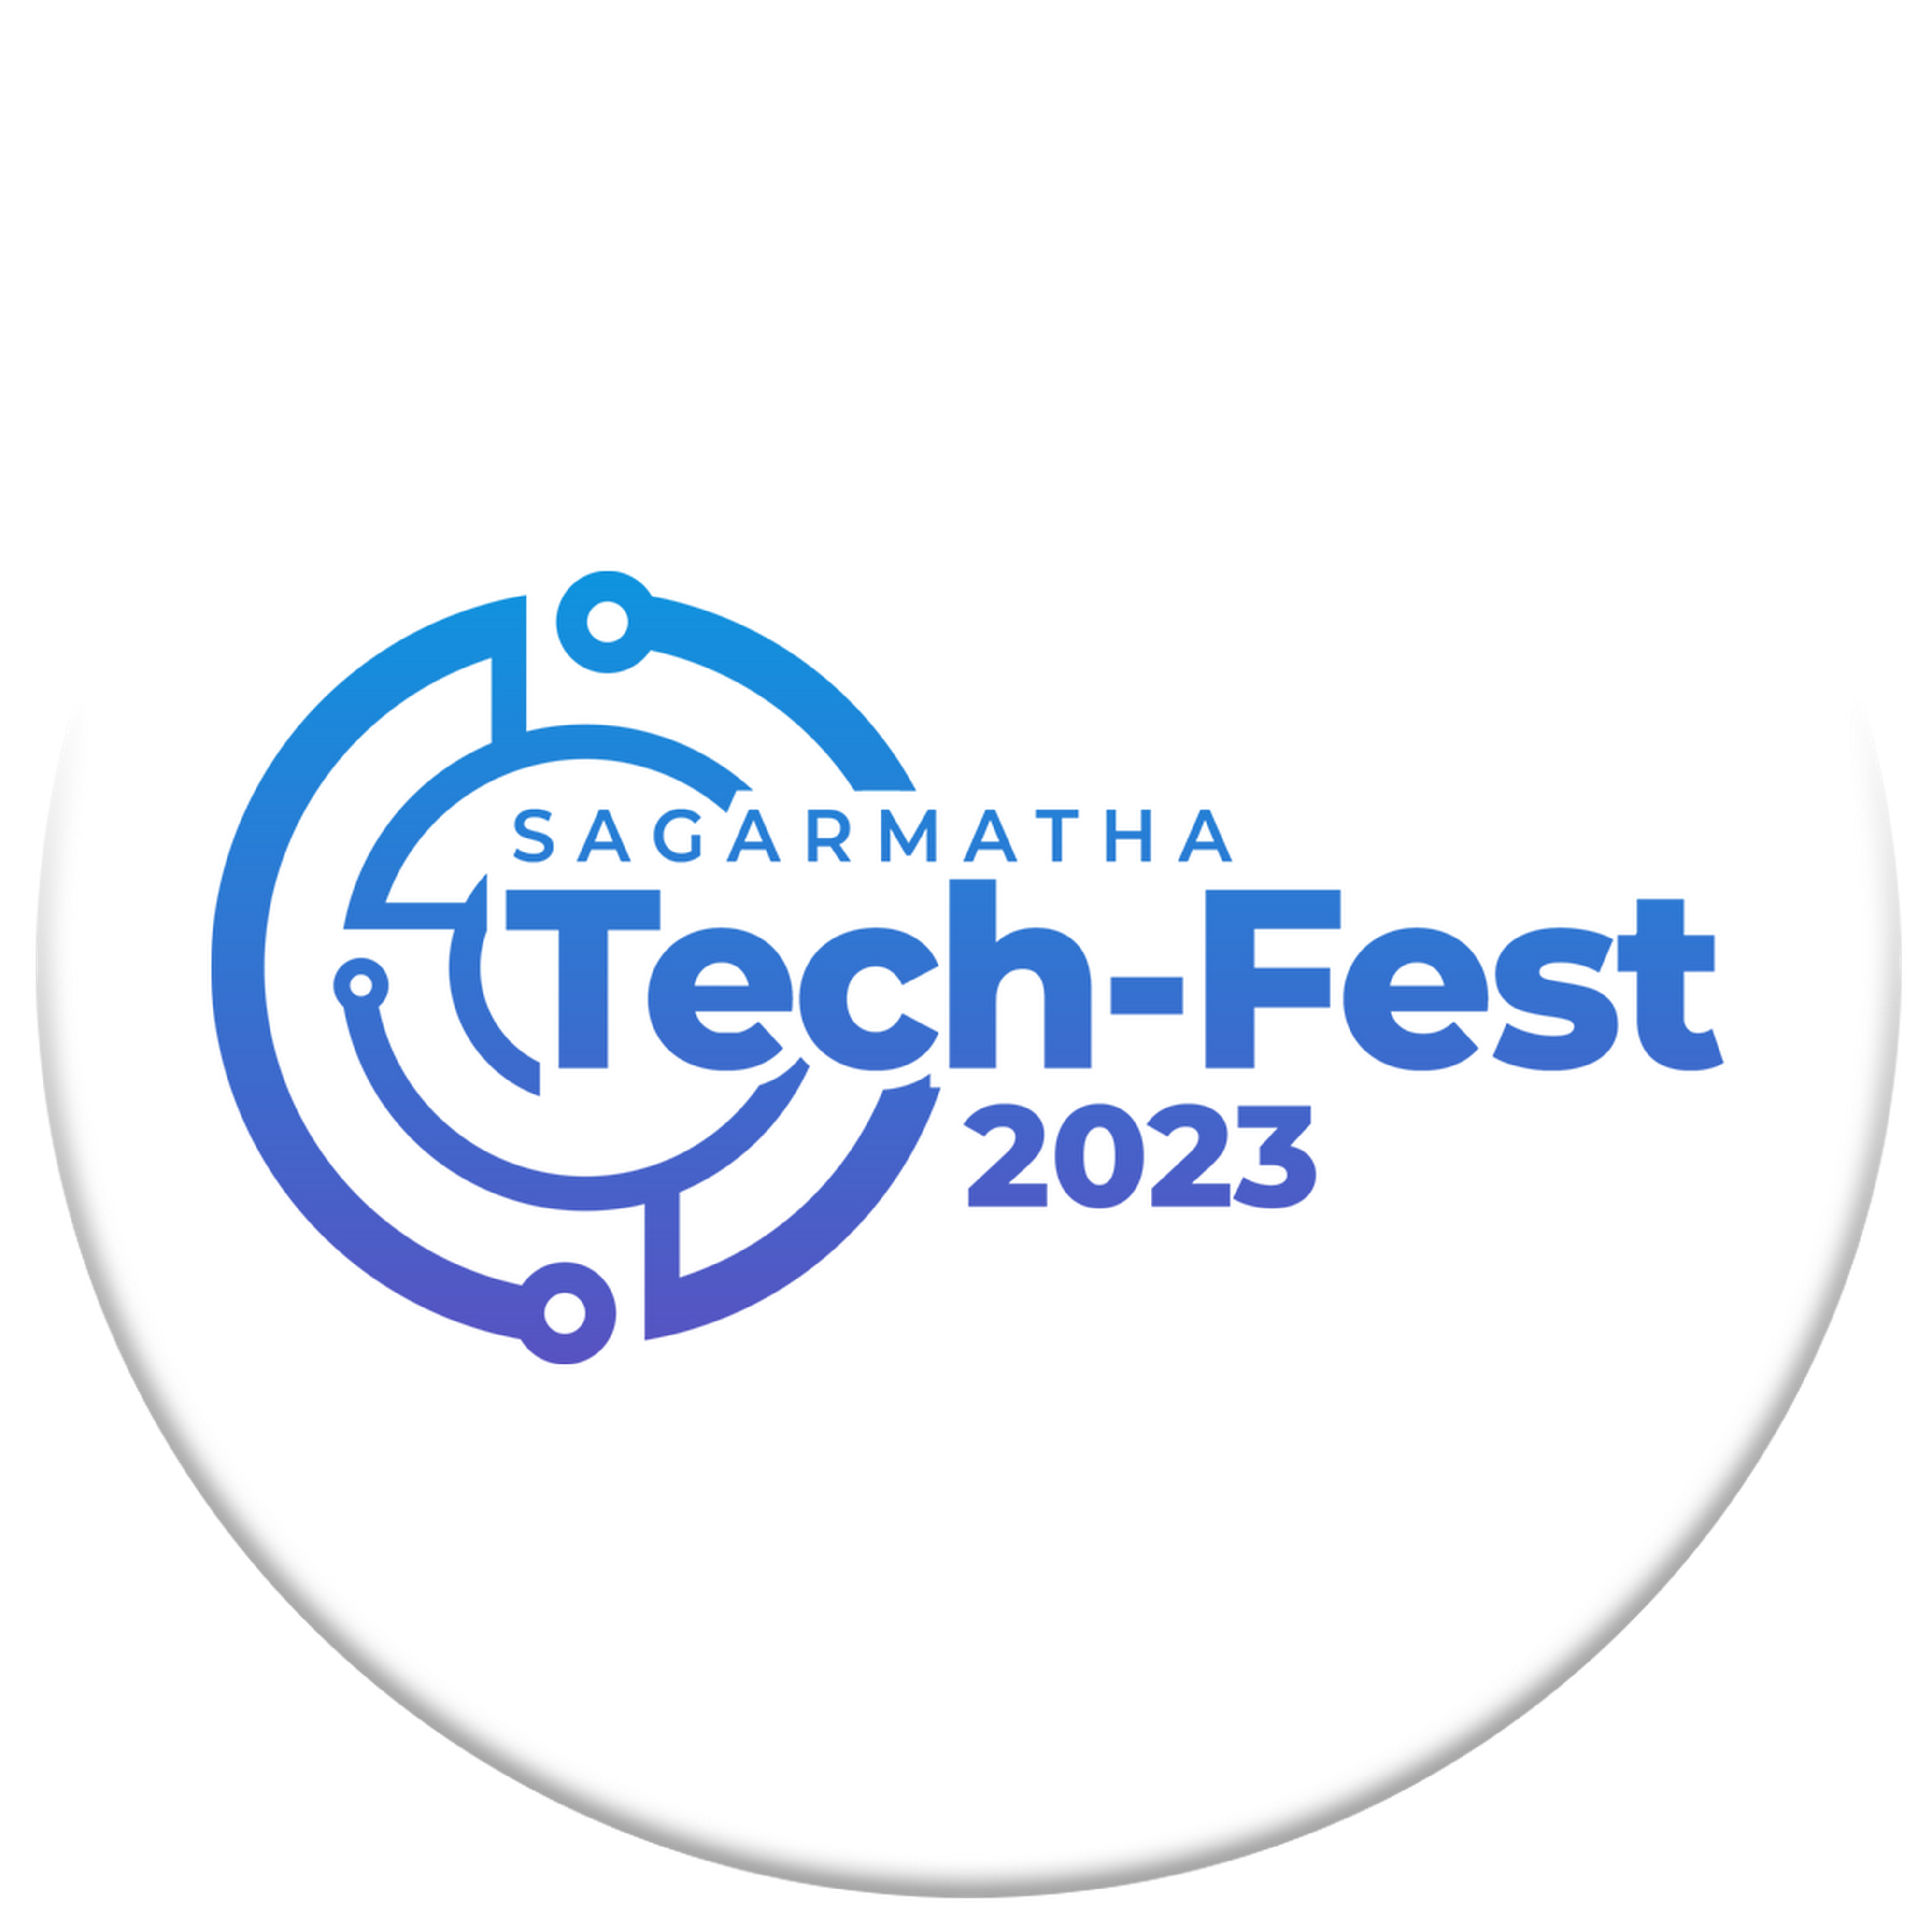 Sagarmatha Techfest